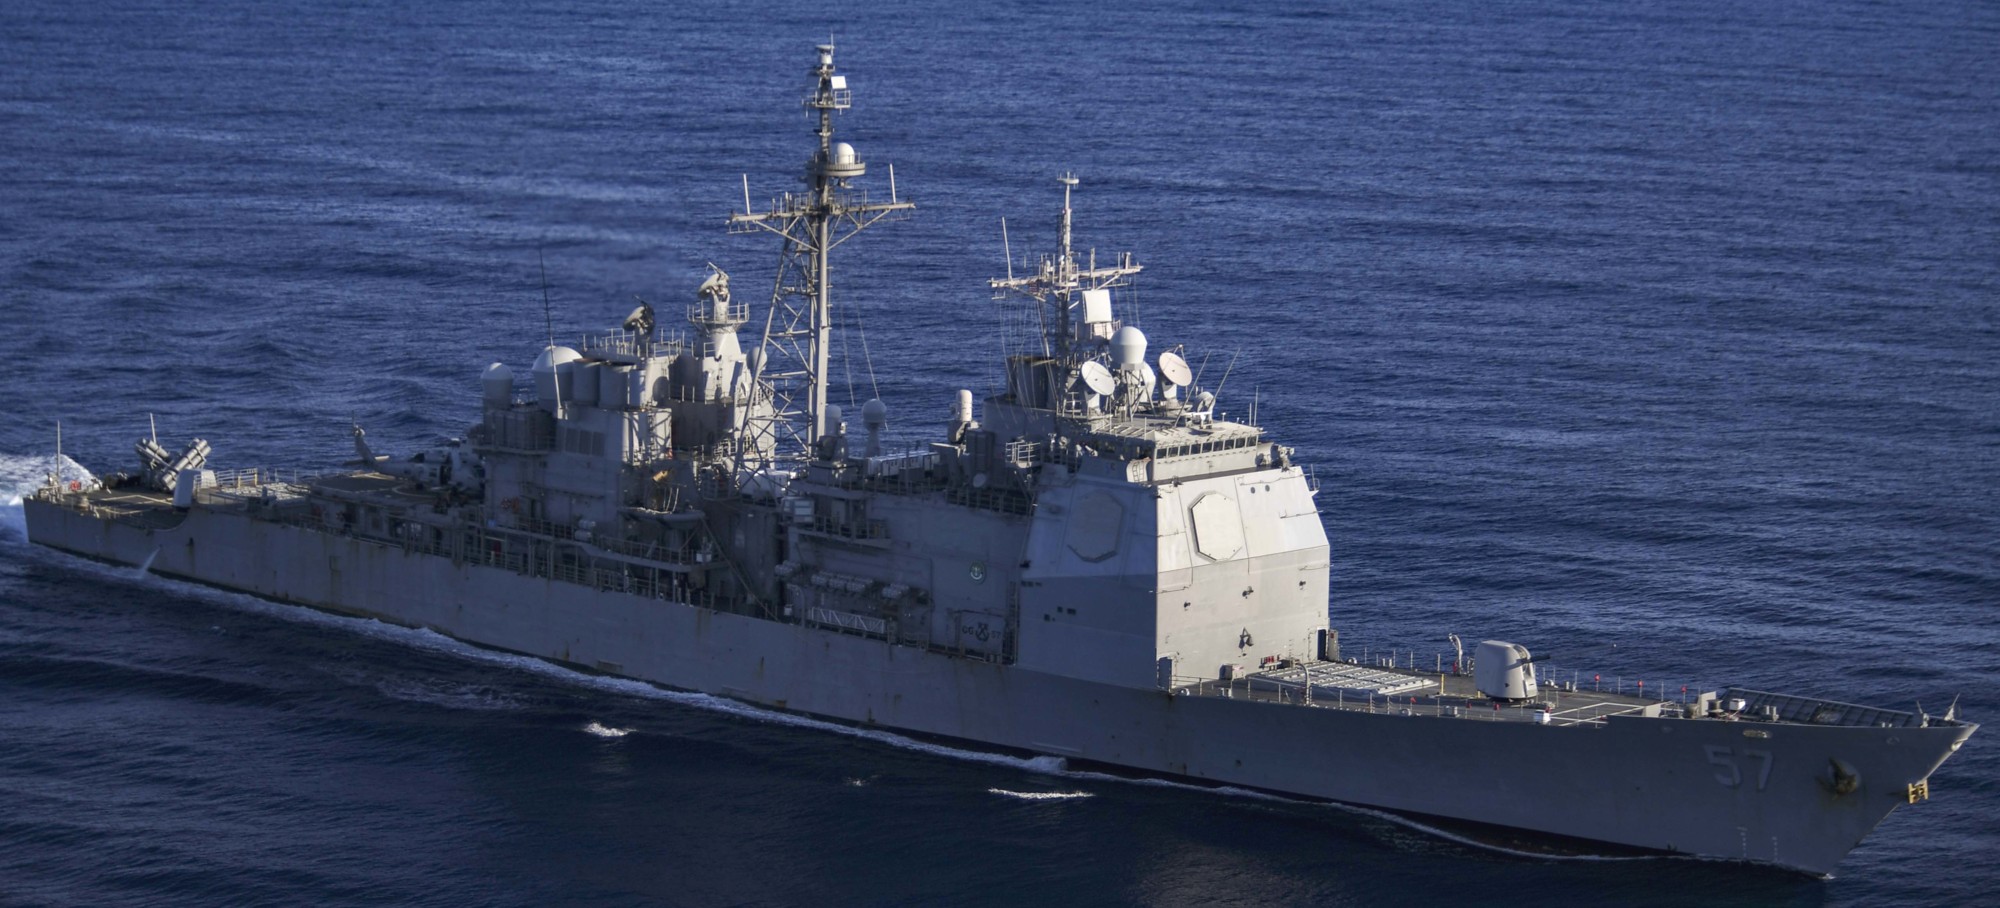 cg-67 uss shiloh ticonderoga class guided missile cruiser aegis us navy south china sea 101